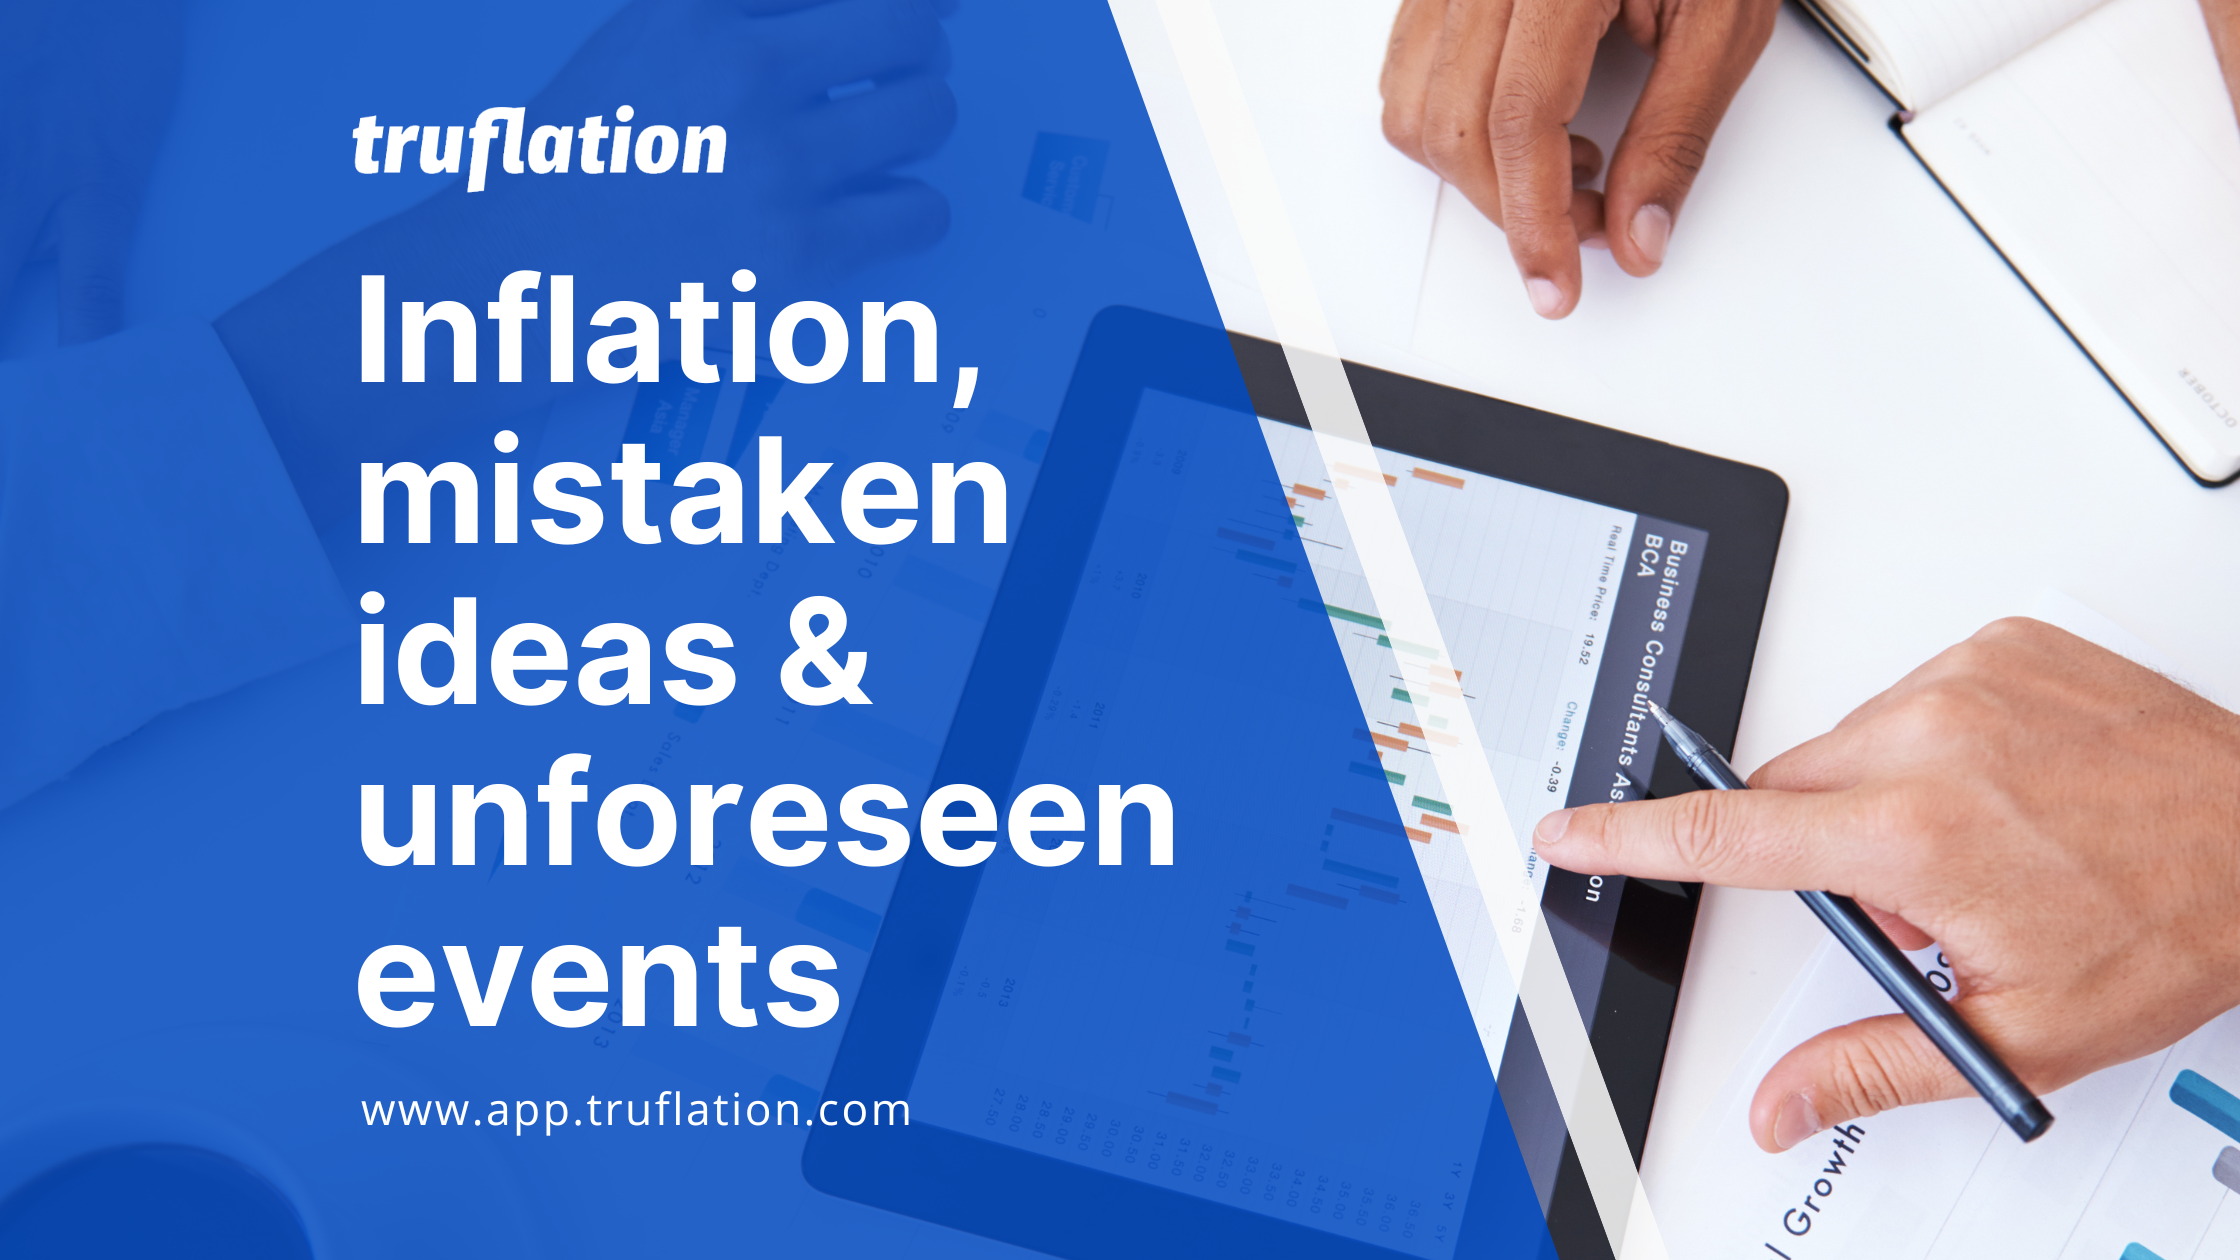 Inflation, mistaken ideas & unforeseen events